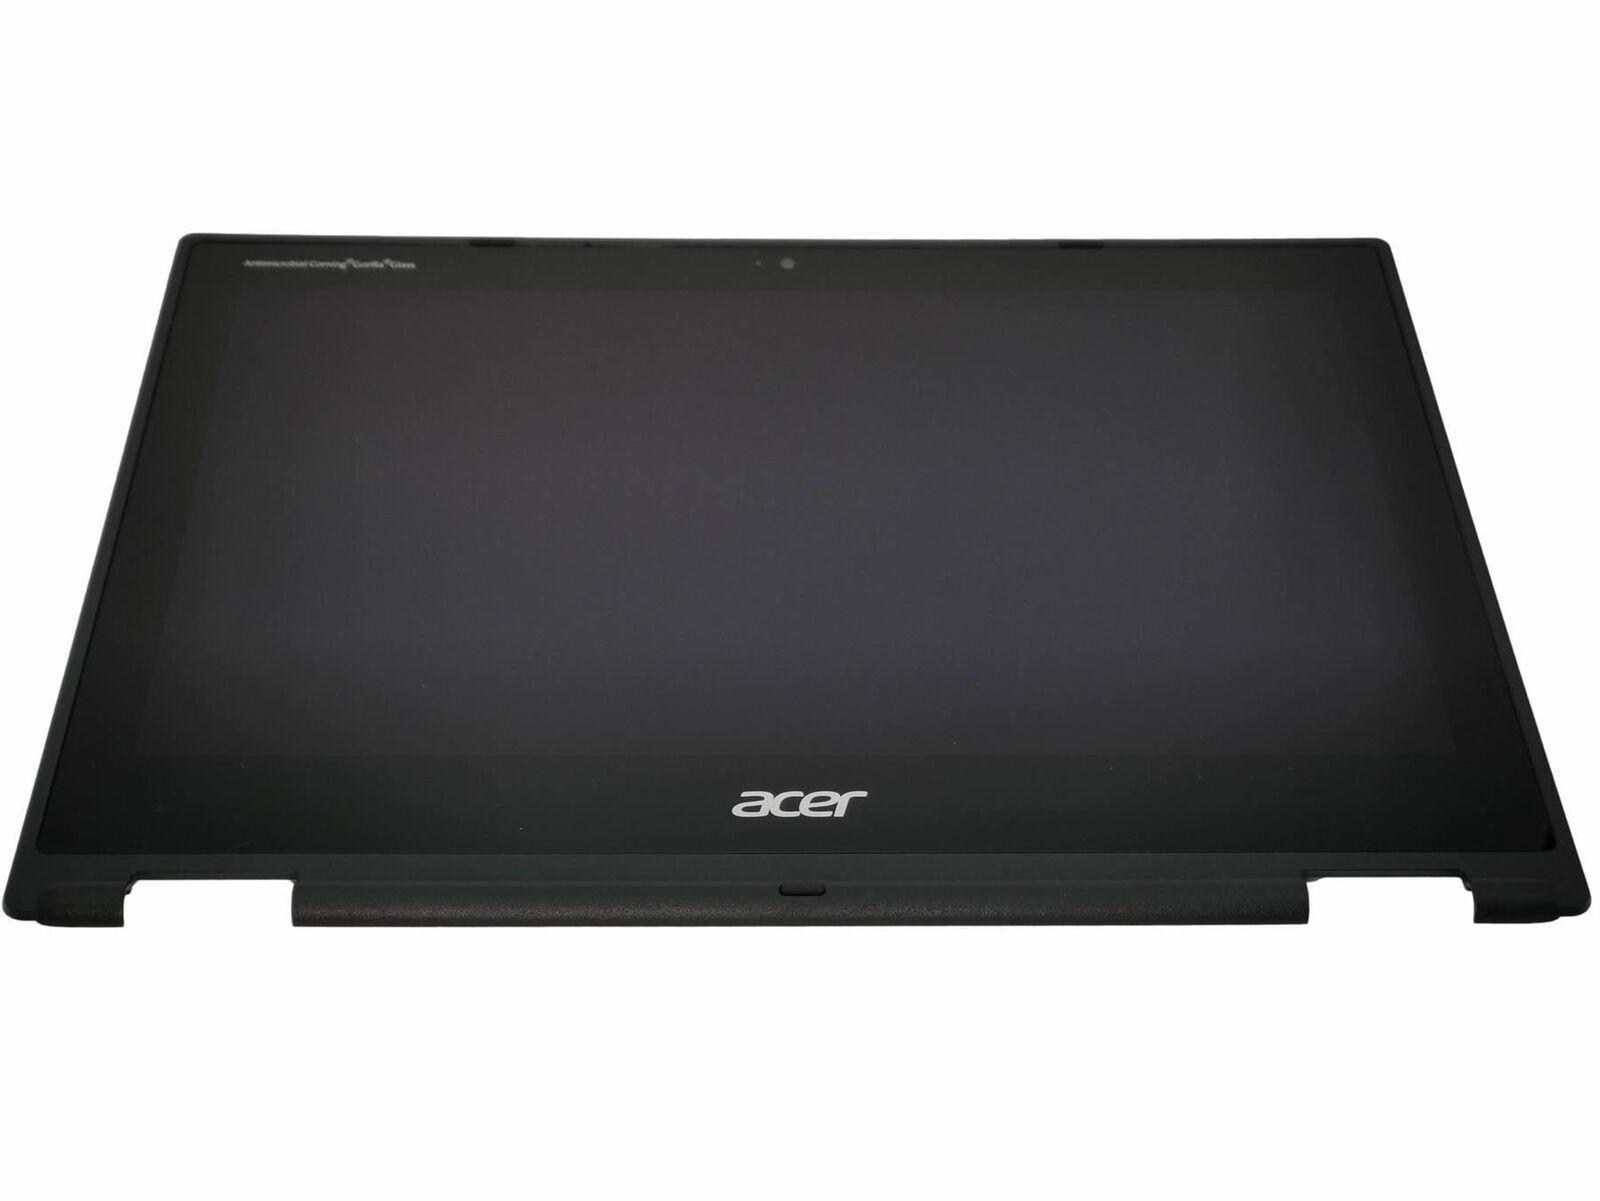 6M.HBRN7.003 Acer Chromebook 11 R721T Spin 311 B116XAB01 11.6